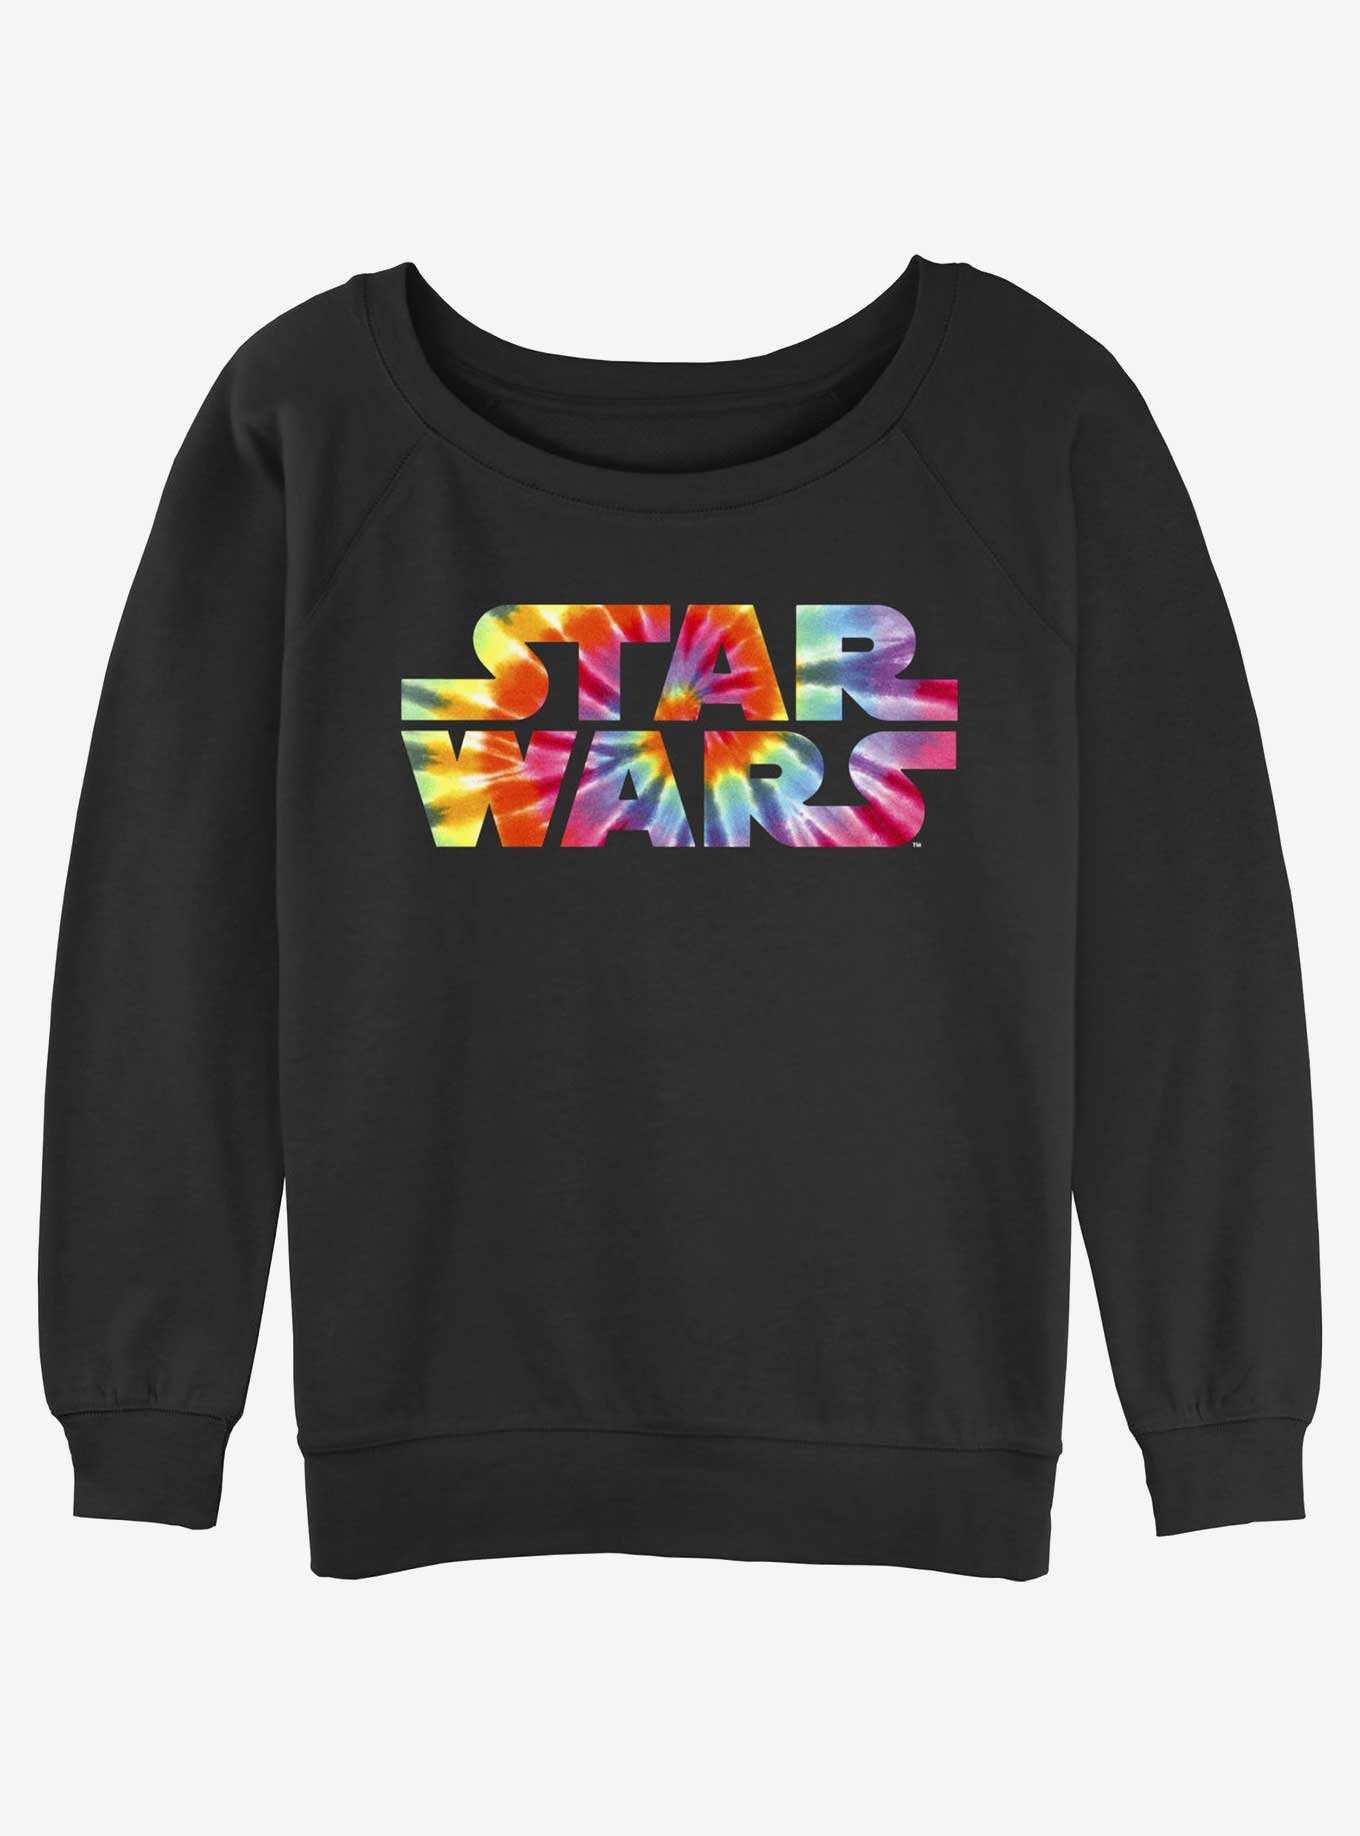 Star Wars Tie Dye Logo Girls Slouchy Sweatshirt, , hi-res